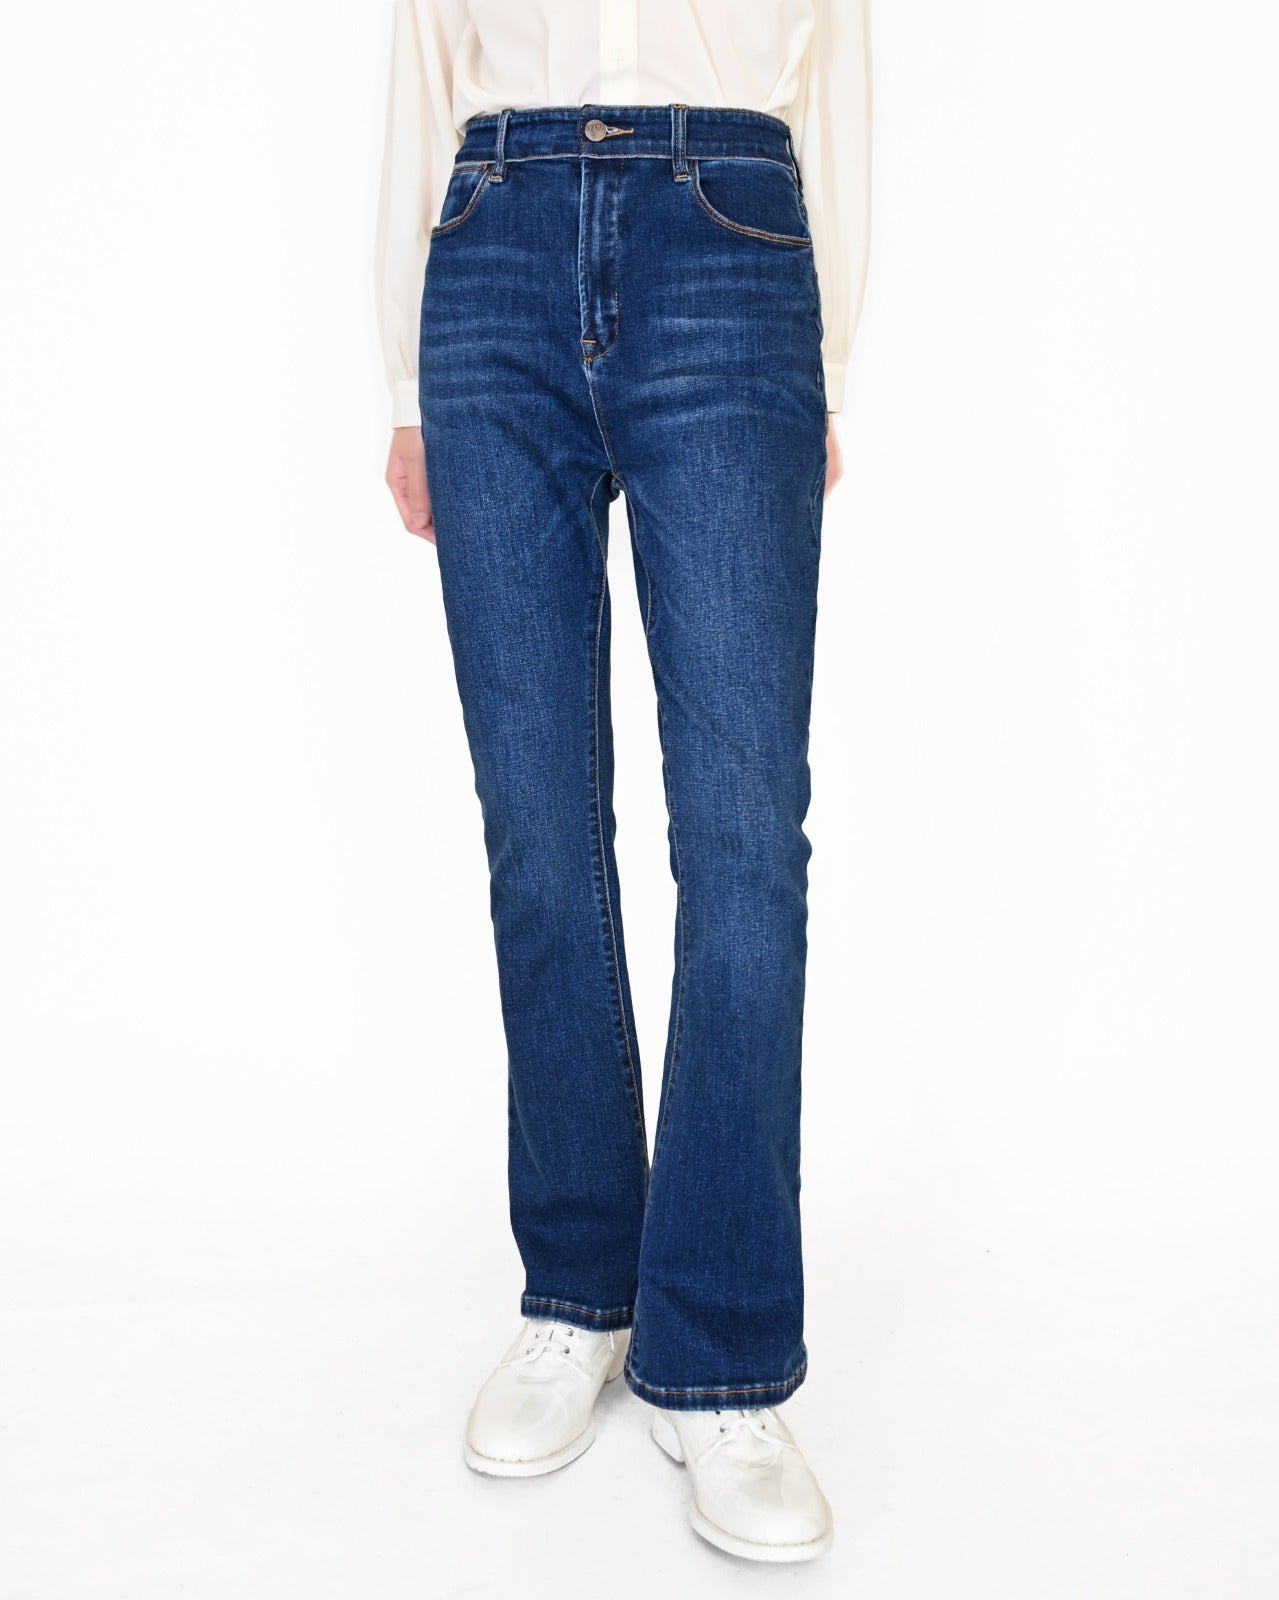 Load image into Gallery viewer, aalis OAK flare denim jeans (Dark denim)
